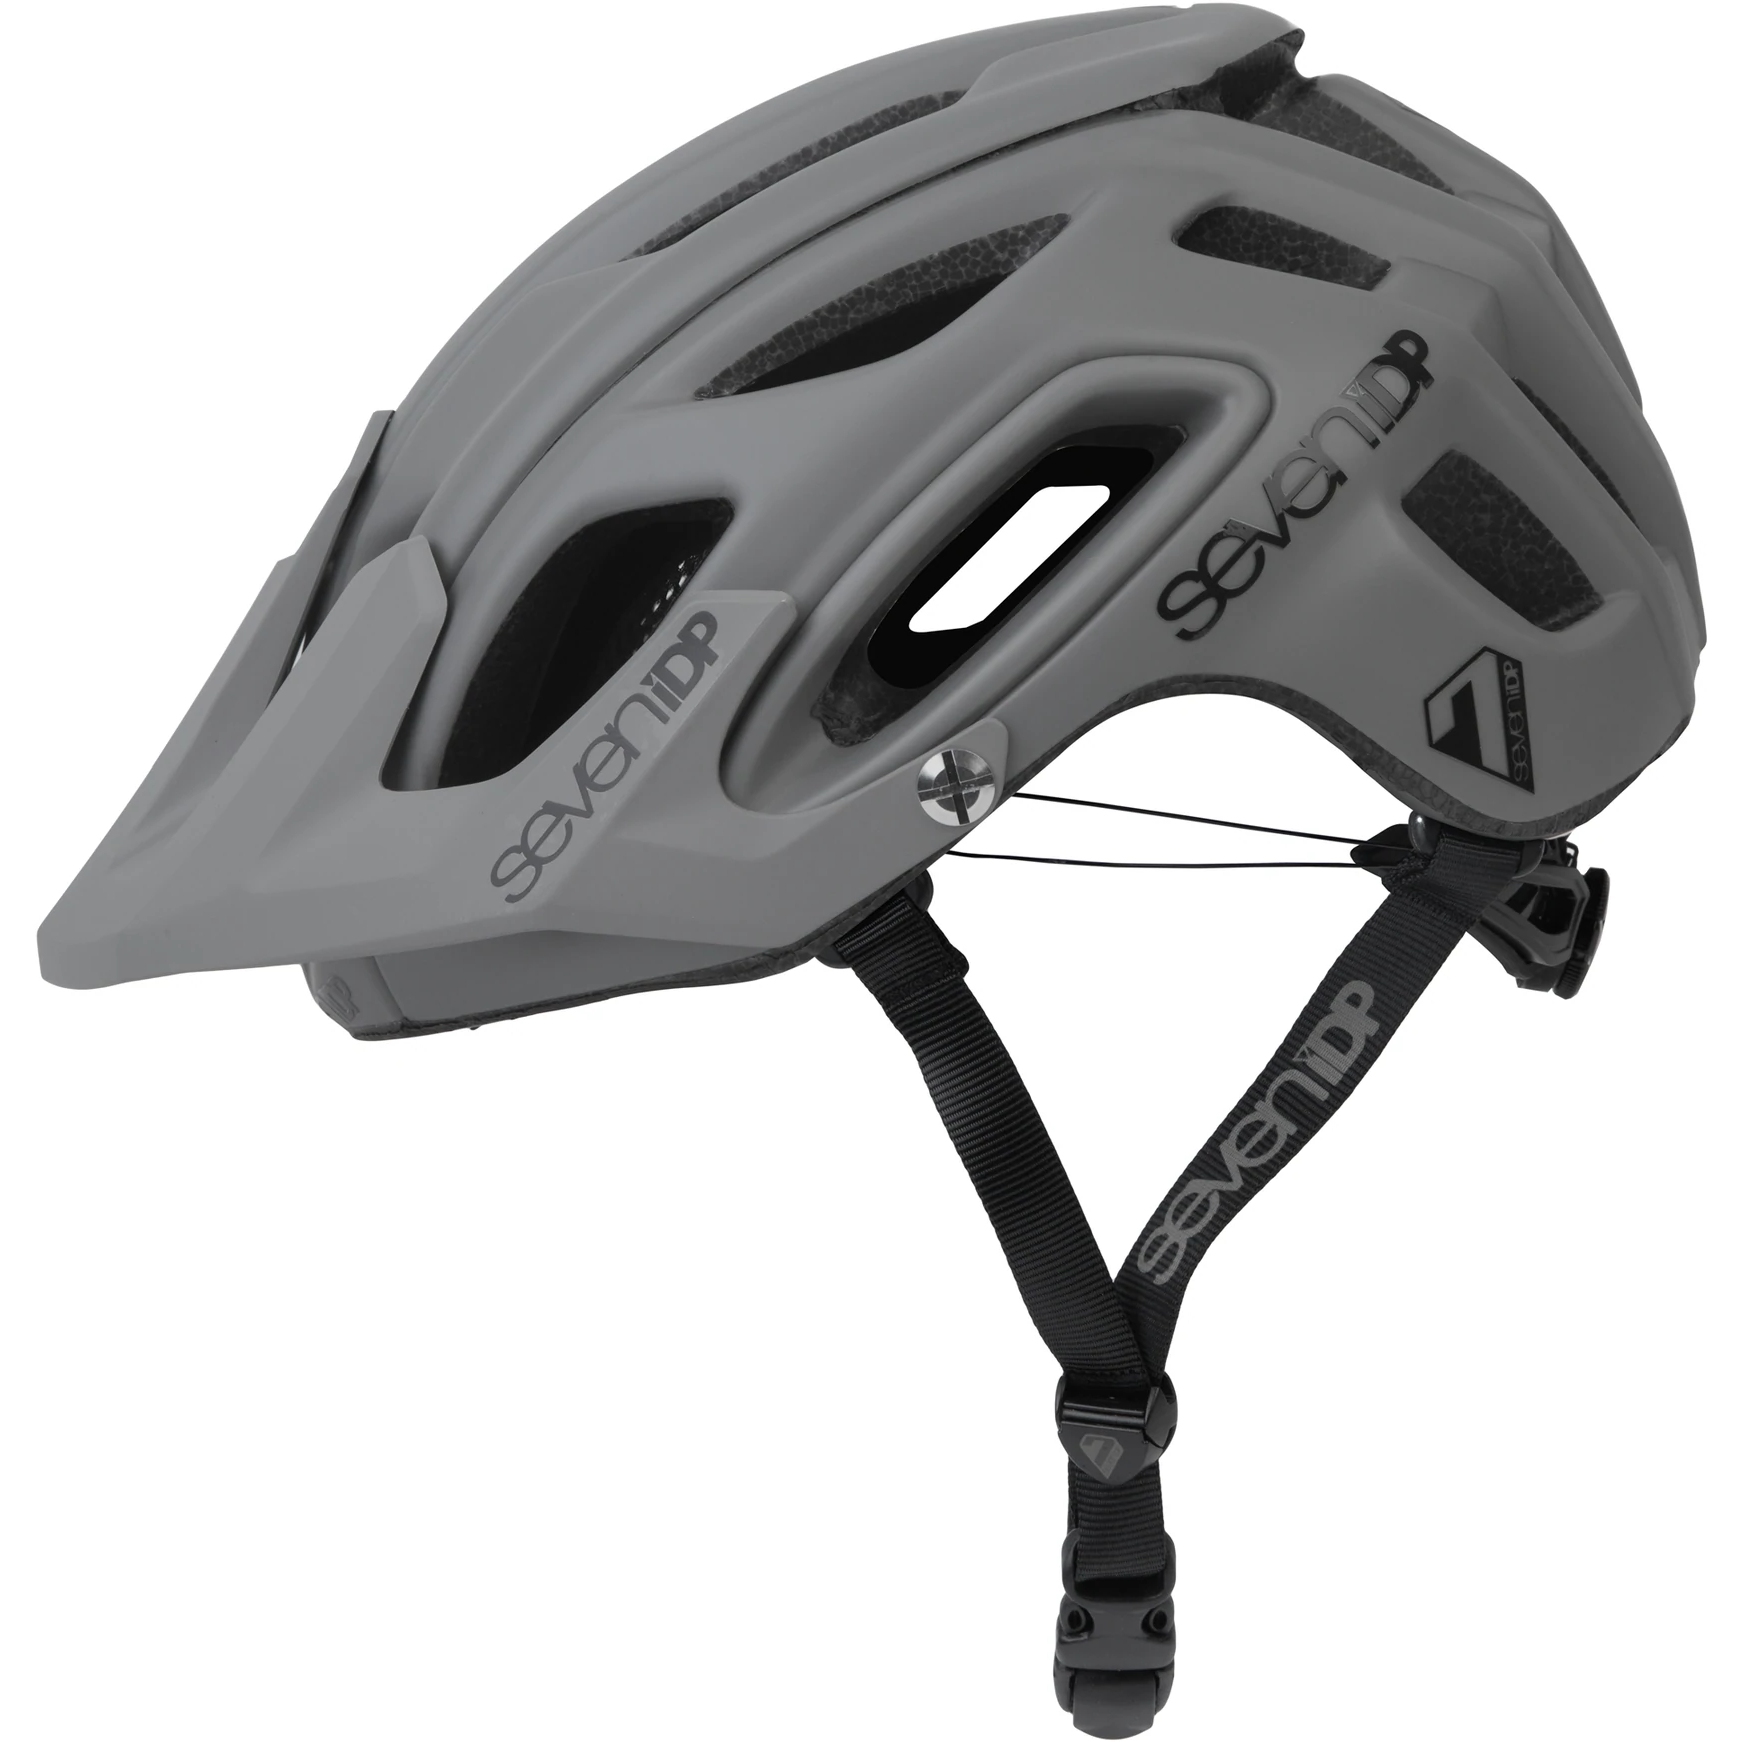 Productfoto van 7 Protection 7iDP M2 BOA Helmet - grey